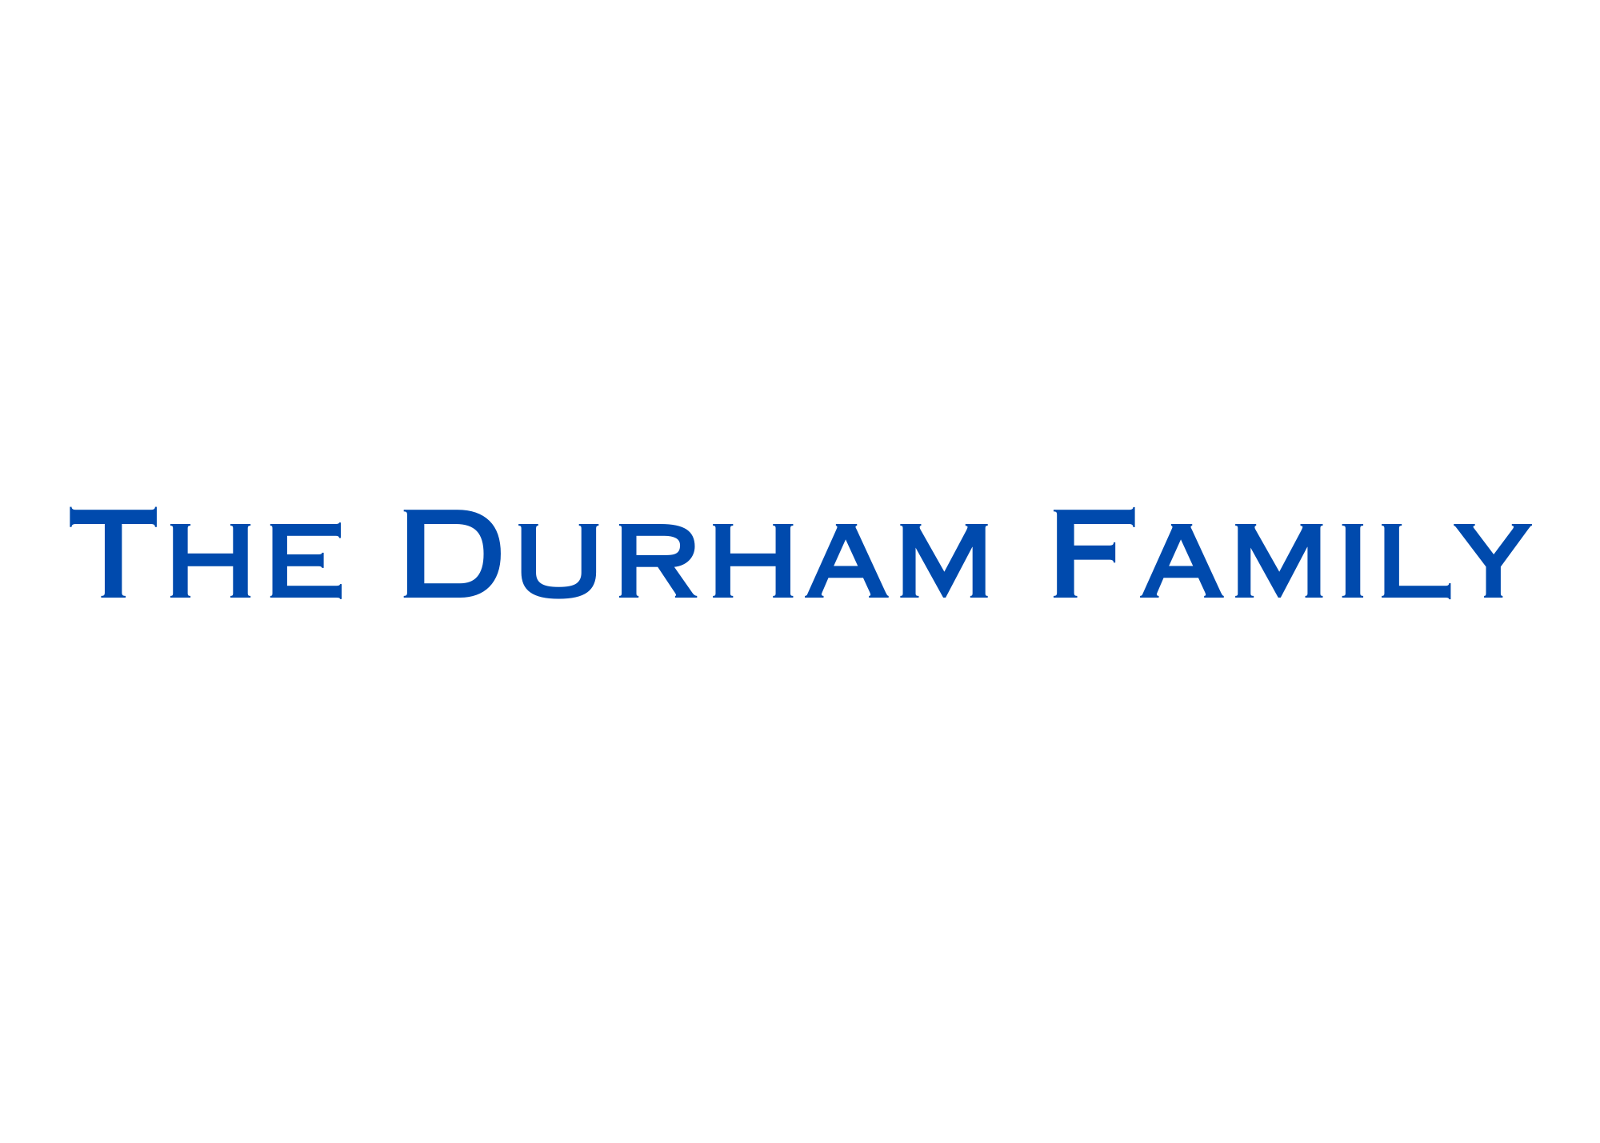 The Durham Family logo